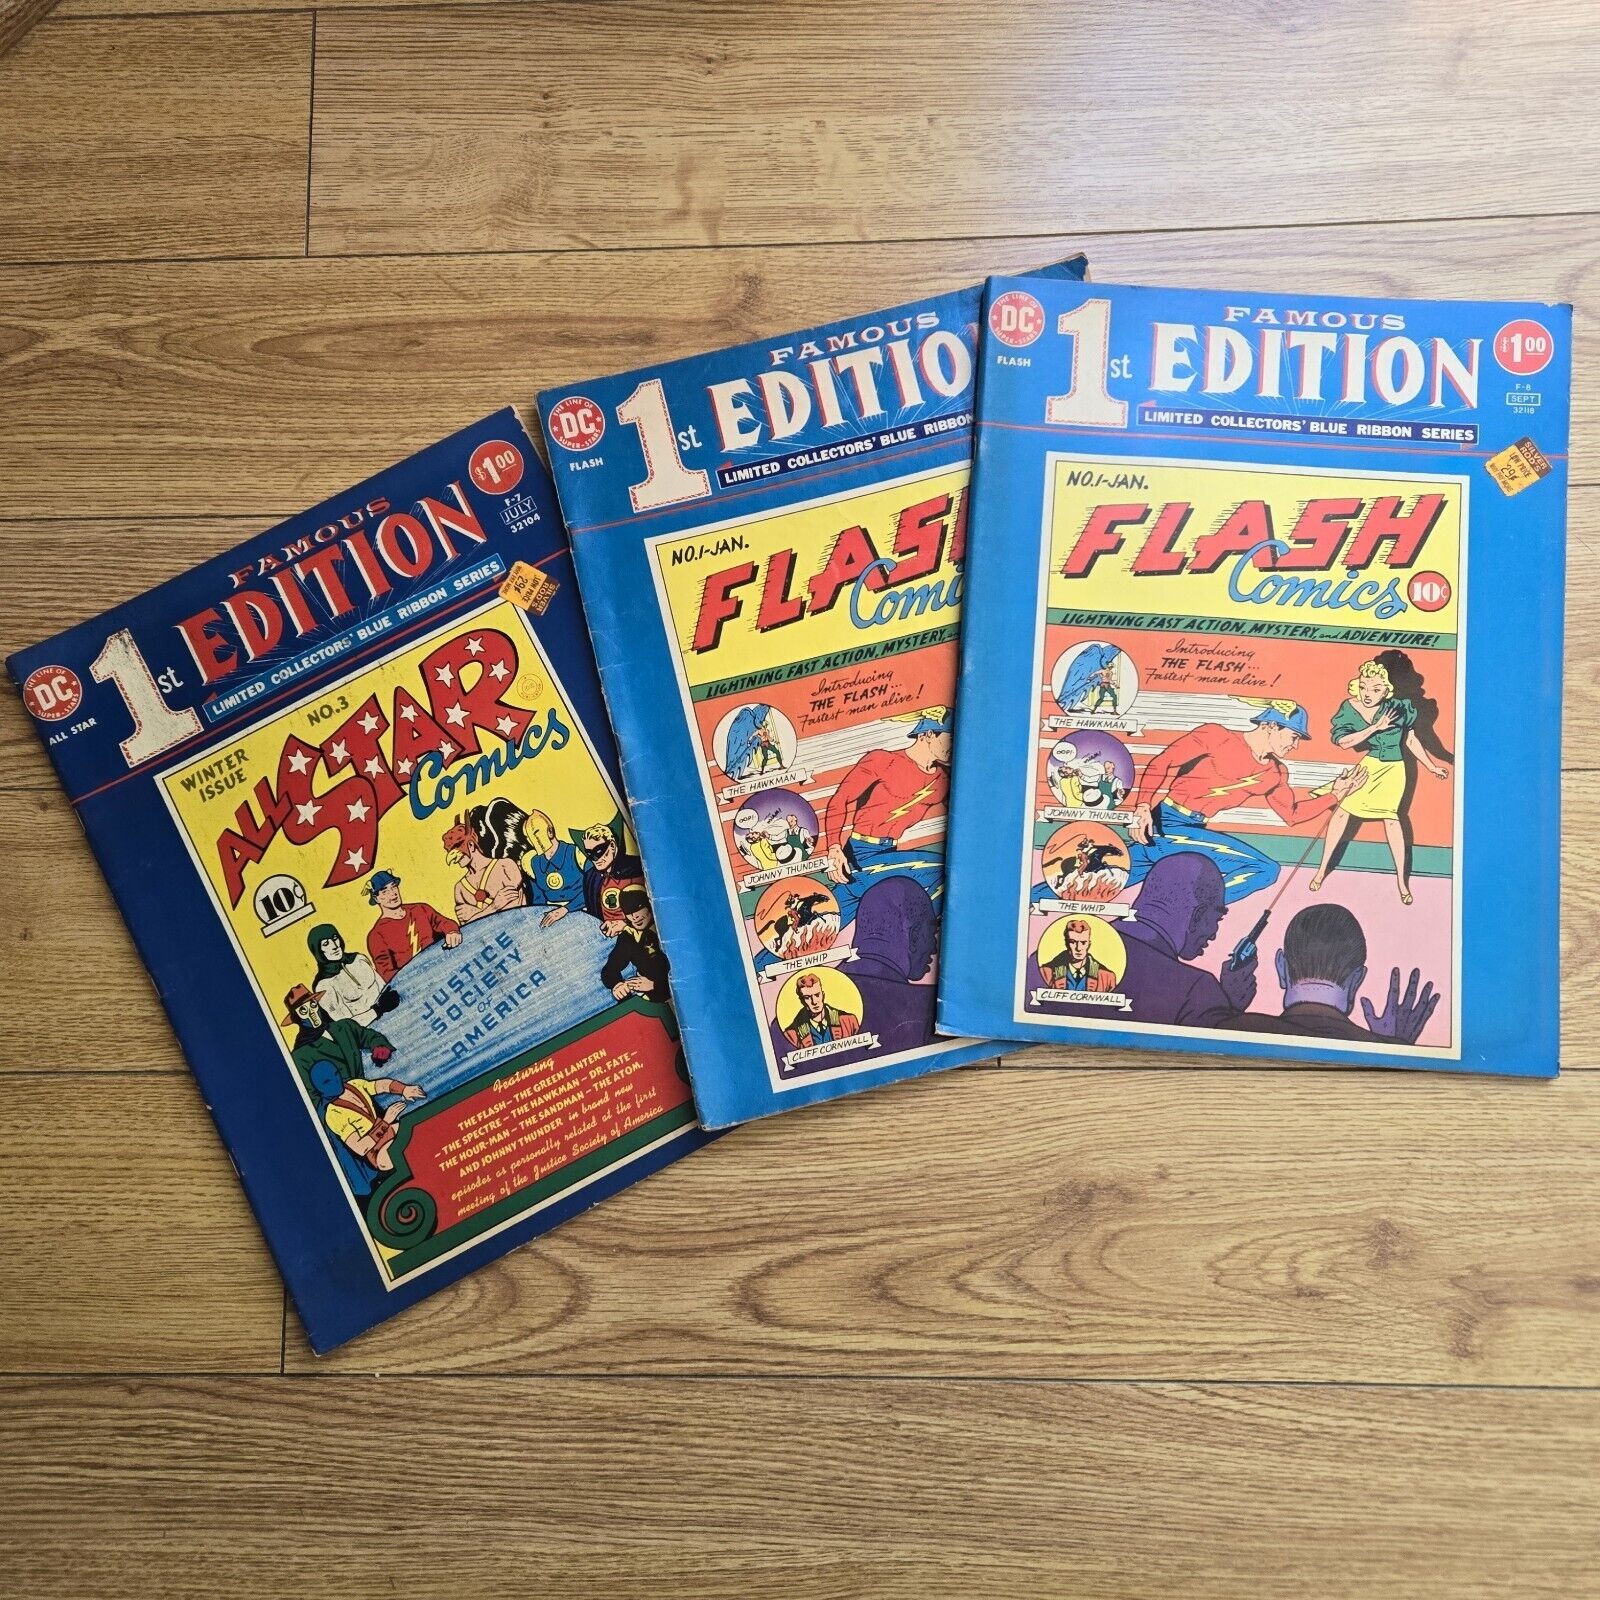 VTG DC Comics: Famous 1st Edition Blue Ribbon: ALL STAR COMICS #3 + 2x FLASH #1